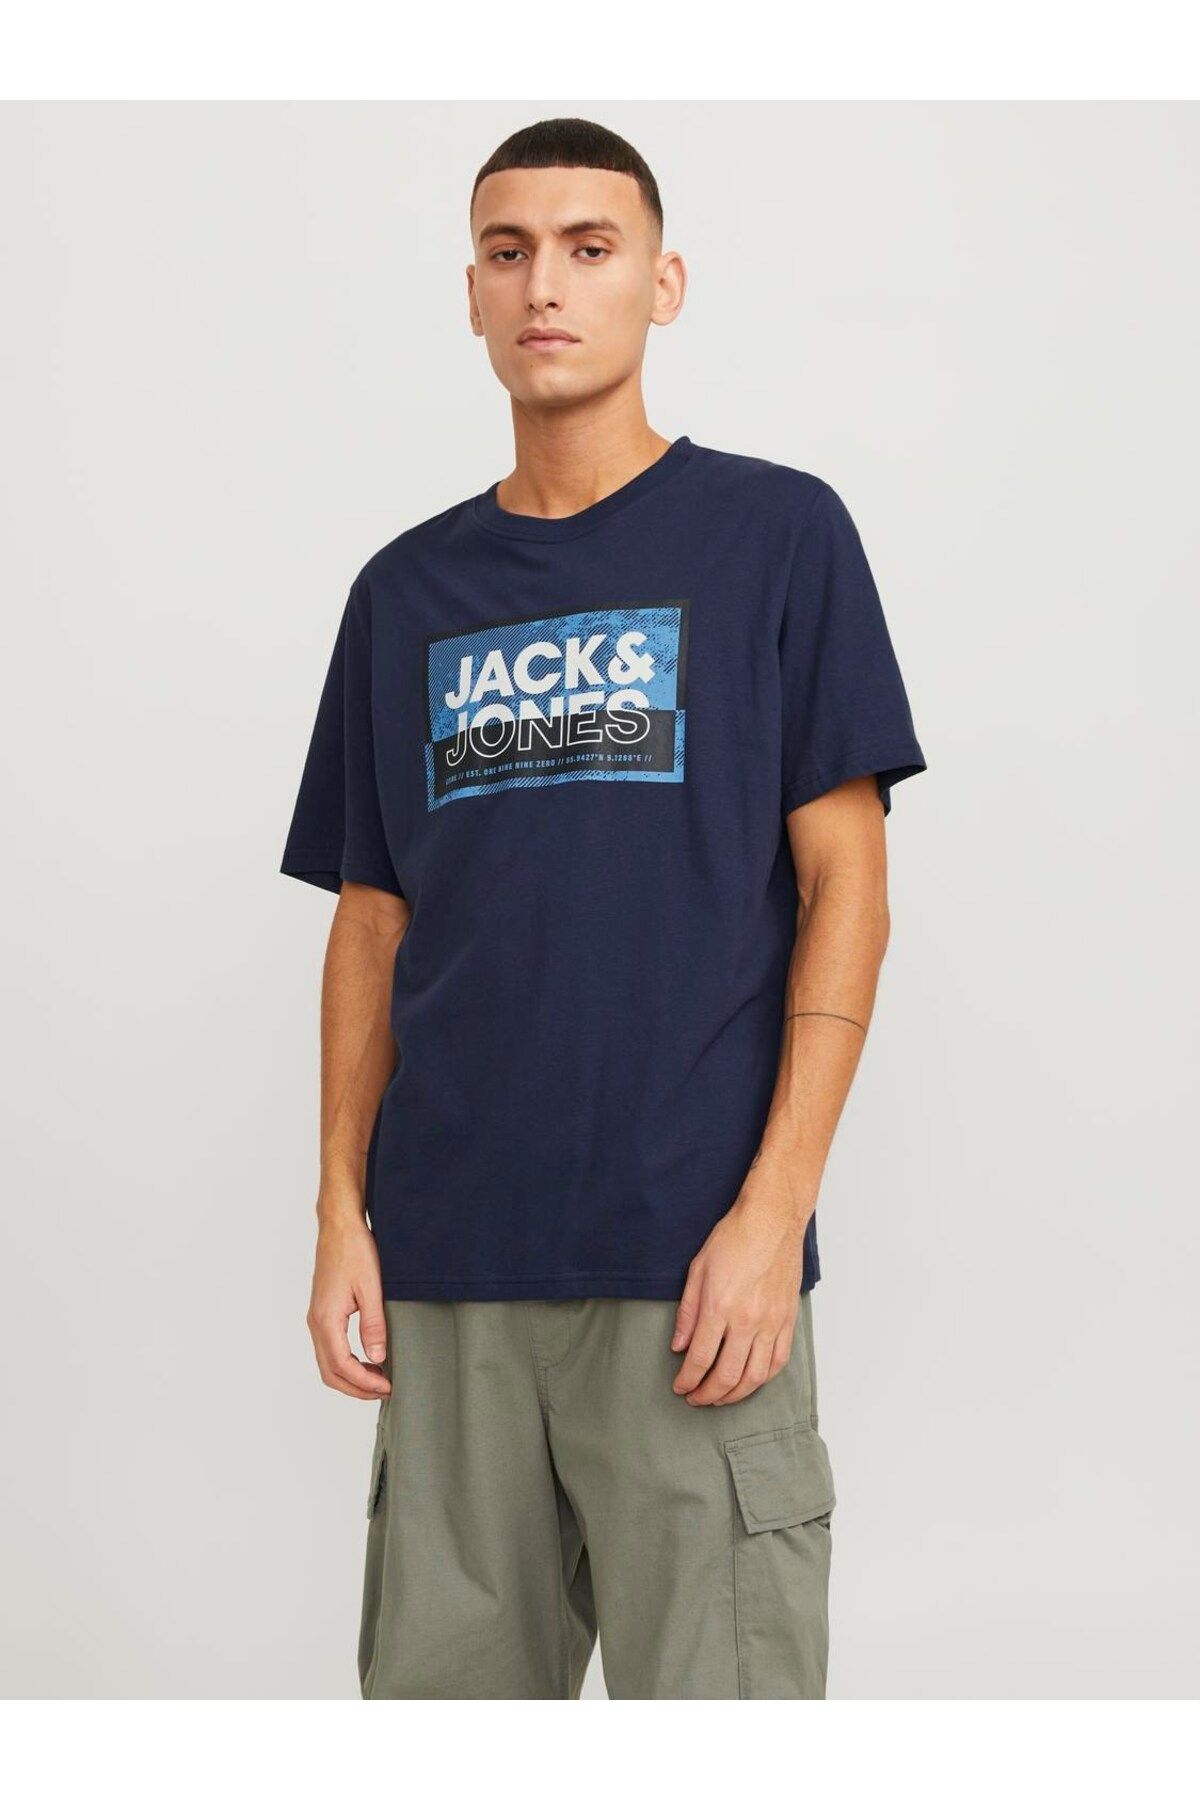 Jack & Jones Jack & Jones تی شرت مردانه نیروی دریایی 100% پنبه ای جک و جونز 12253442